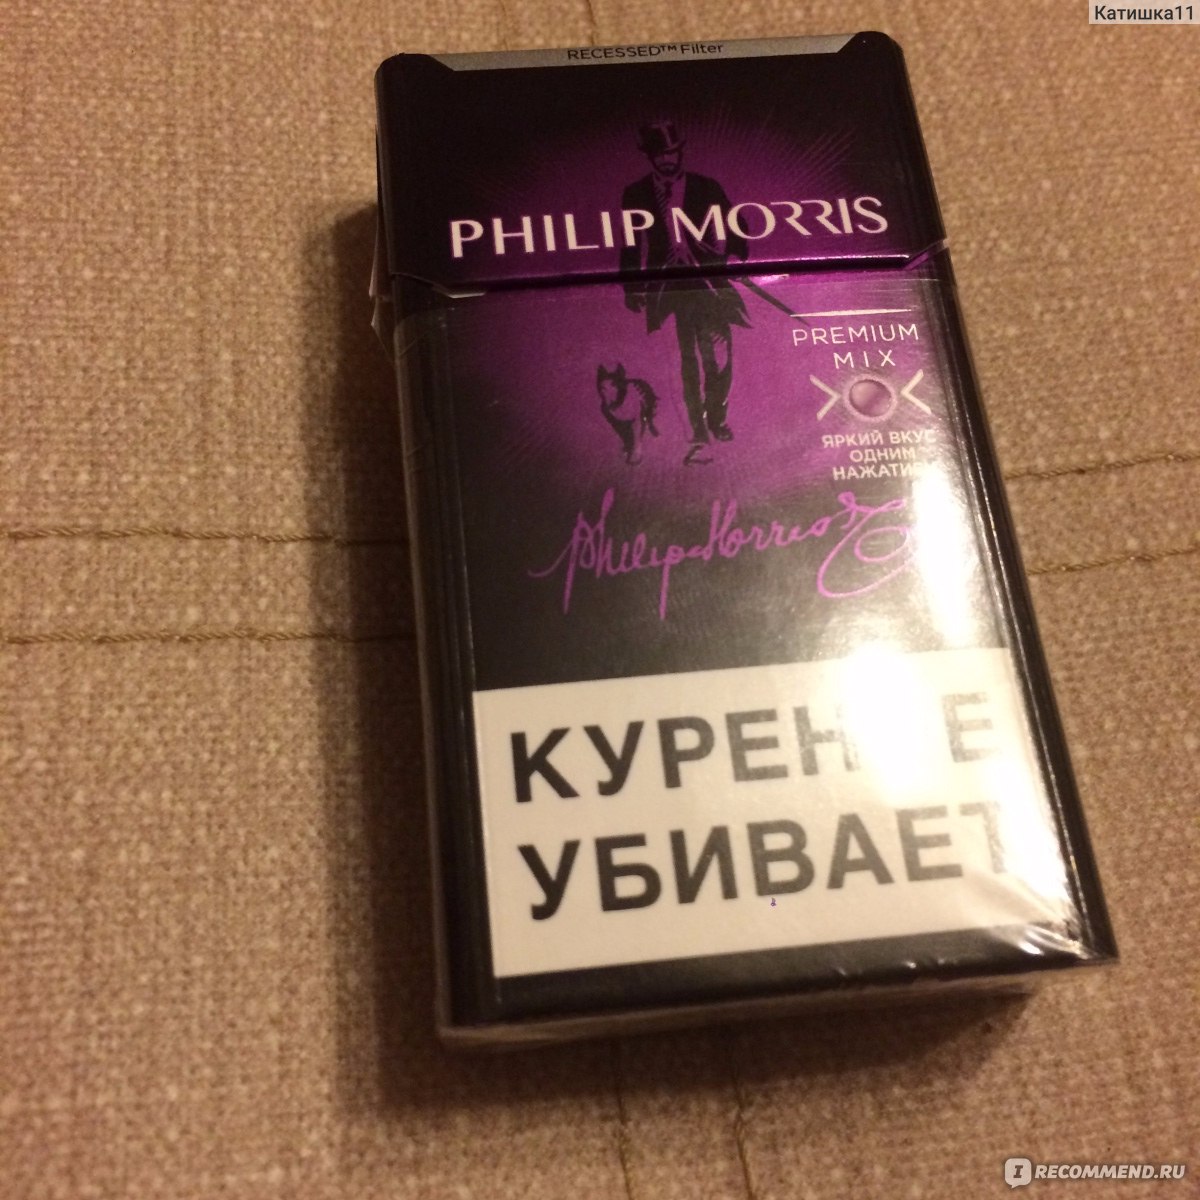 Филип морис фиолетовый. Сигареты Филип Моррис с кнопкой. Сигареты Филип Моррис с кнопкой фиолетовой. Сигареты Philip Morris с фиолетовой кнопкой.